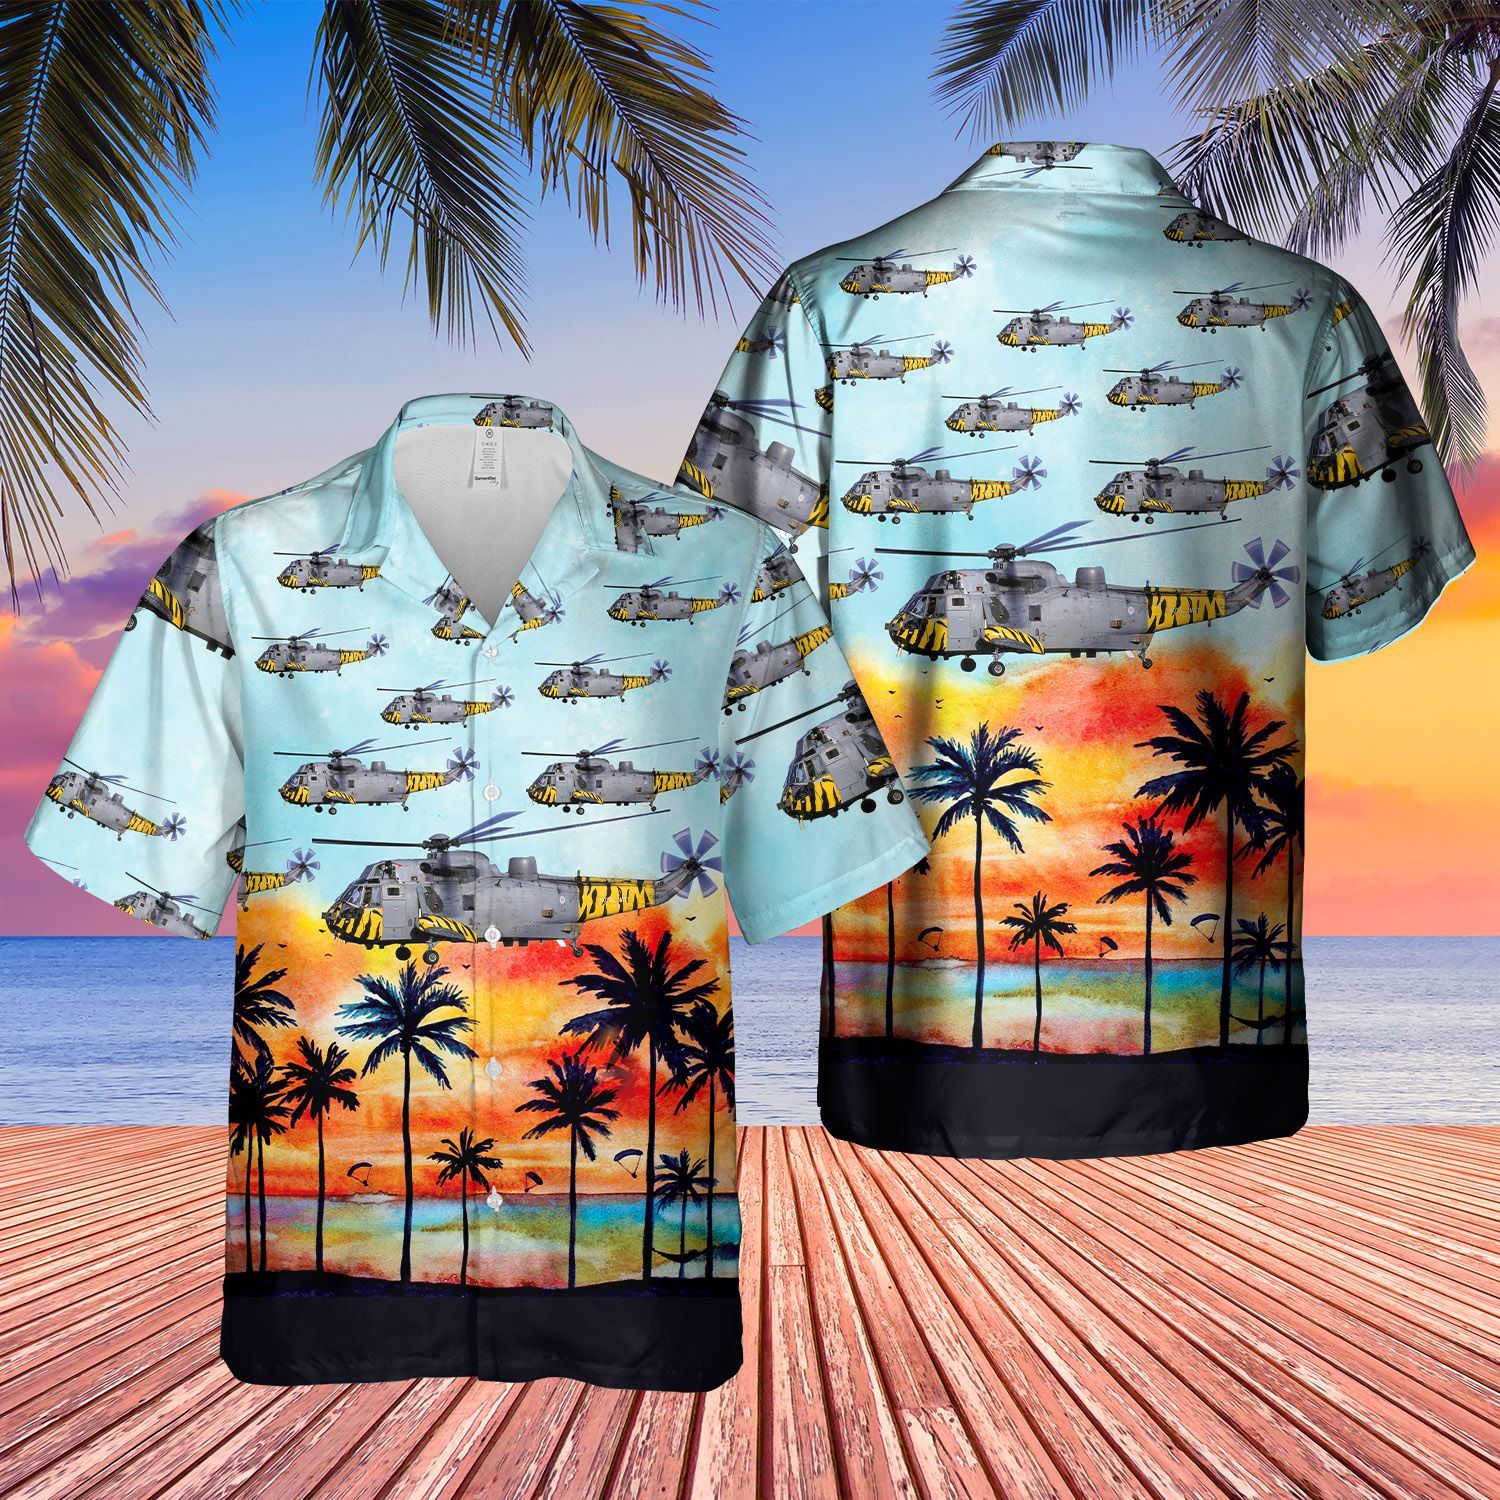 Enjoy your summer with top cool hawaiian shirt below 15